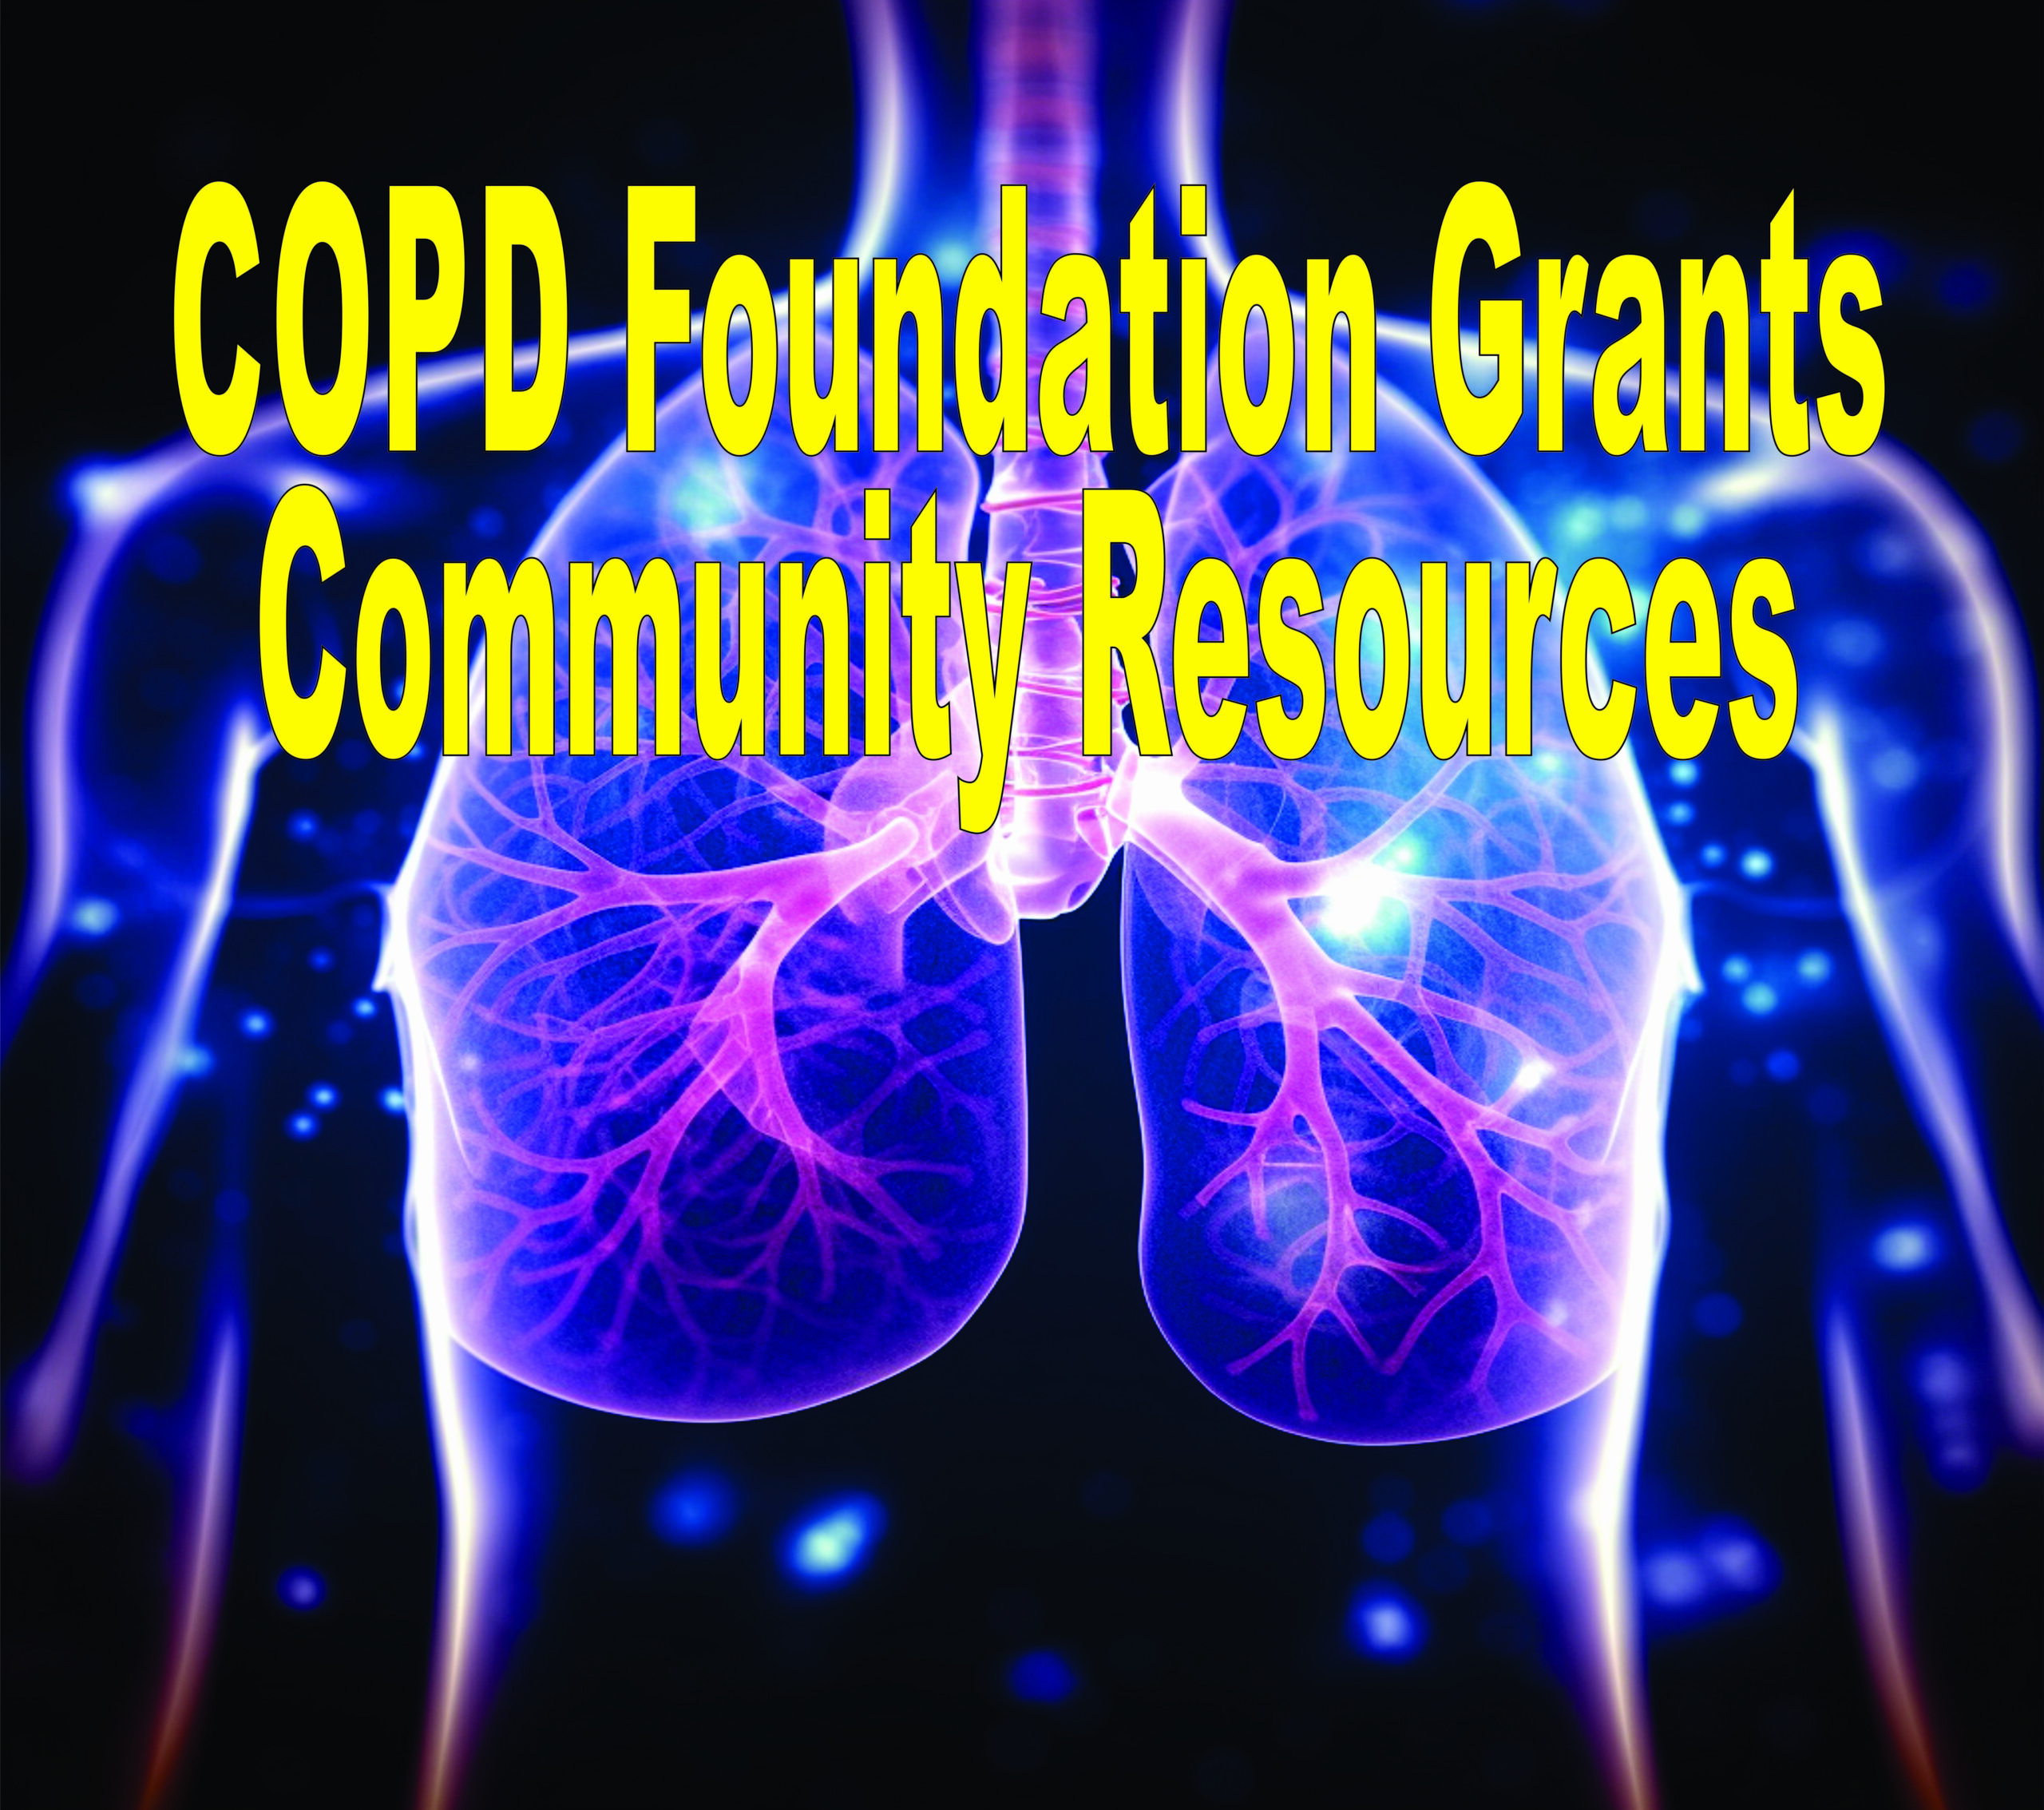 Copd Foundation Grants Community Resources